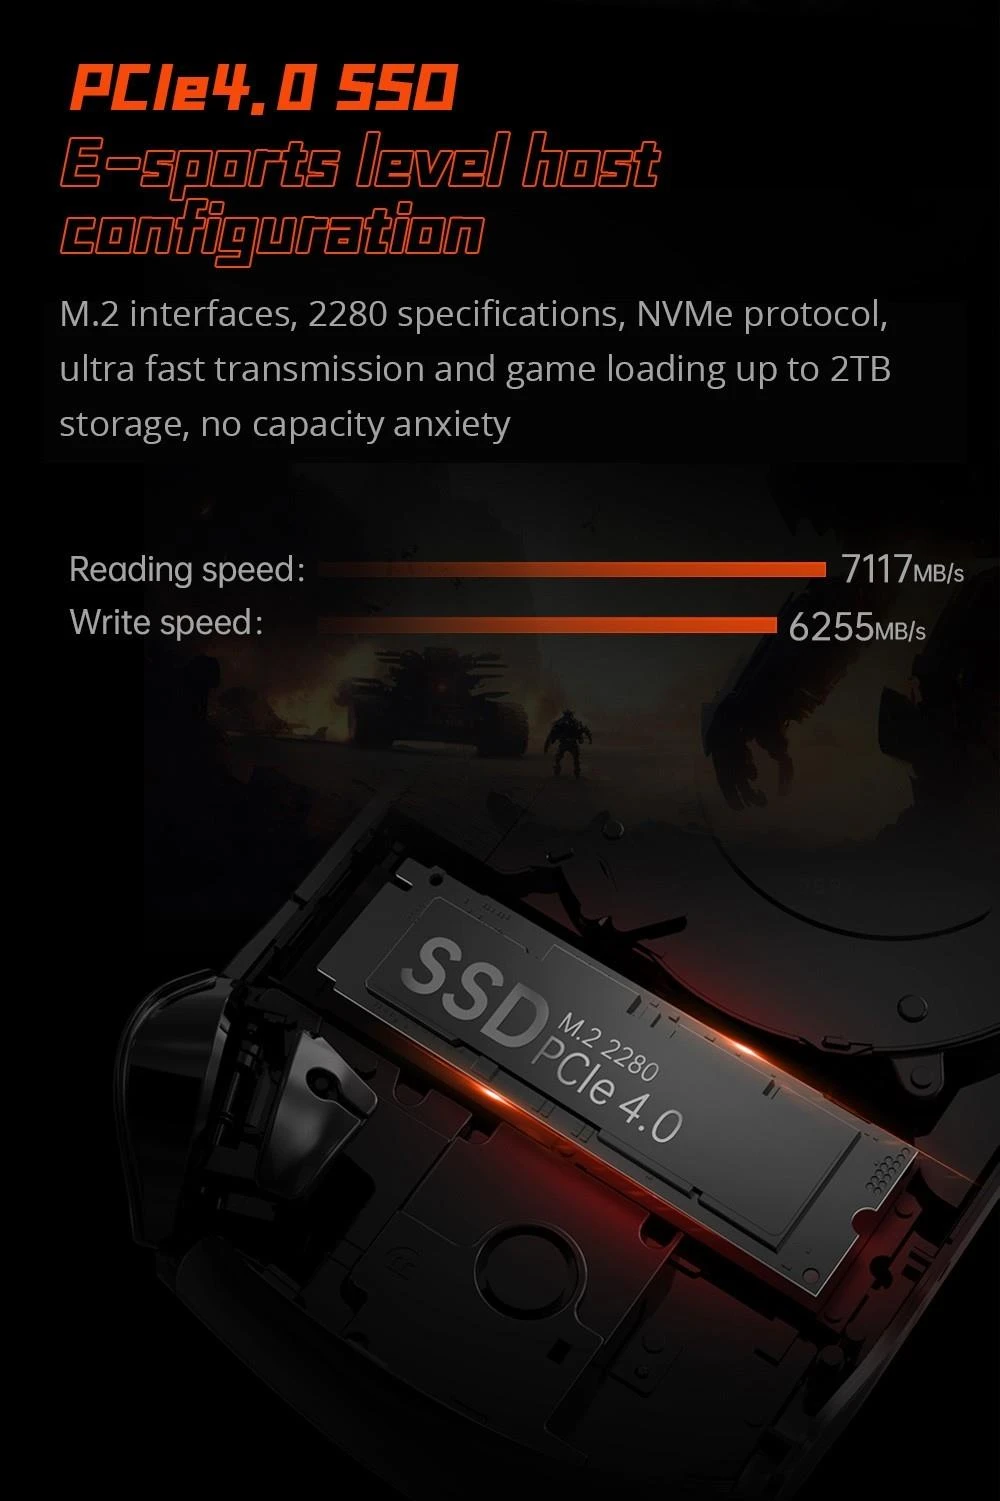 One Netbook ONEXFLY Handheld Game Console AMD Ryzen 7 7840U 32GB DDR5X RAM 2TB SSD 7-inch Windows 11 WiFi 6E Bluetooth 5.2 - White, US